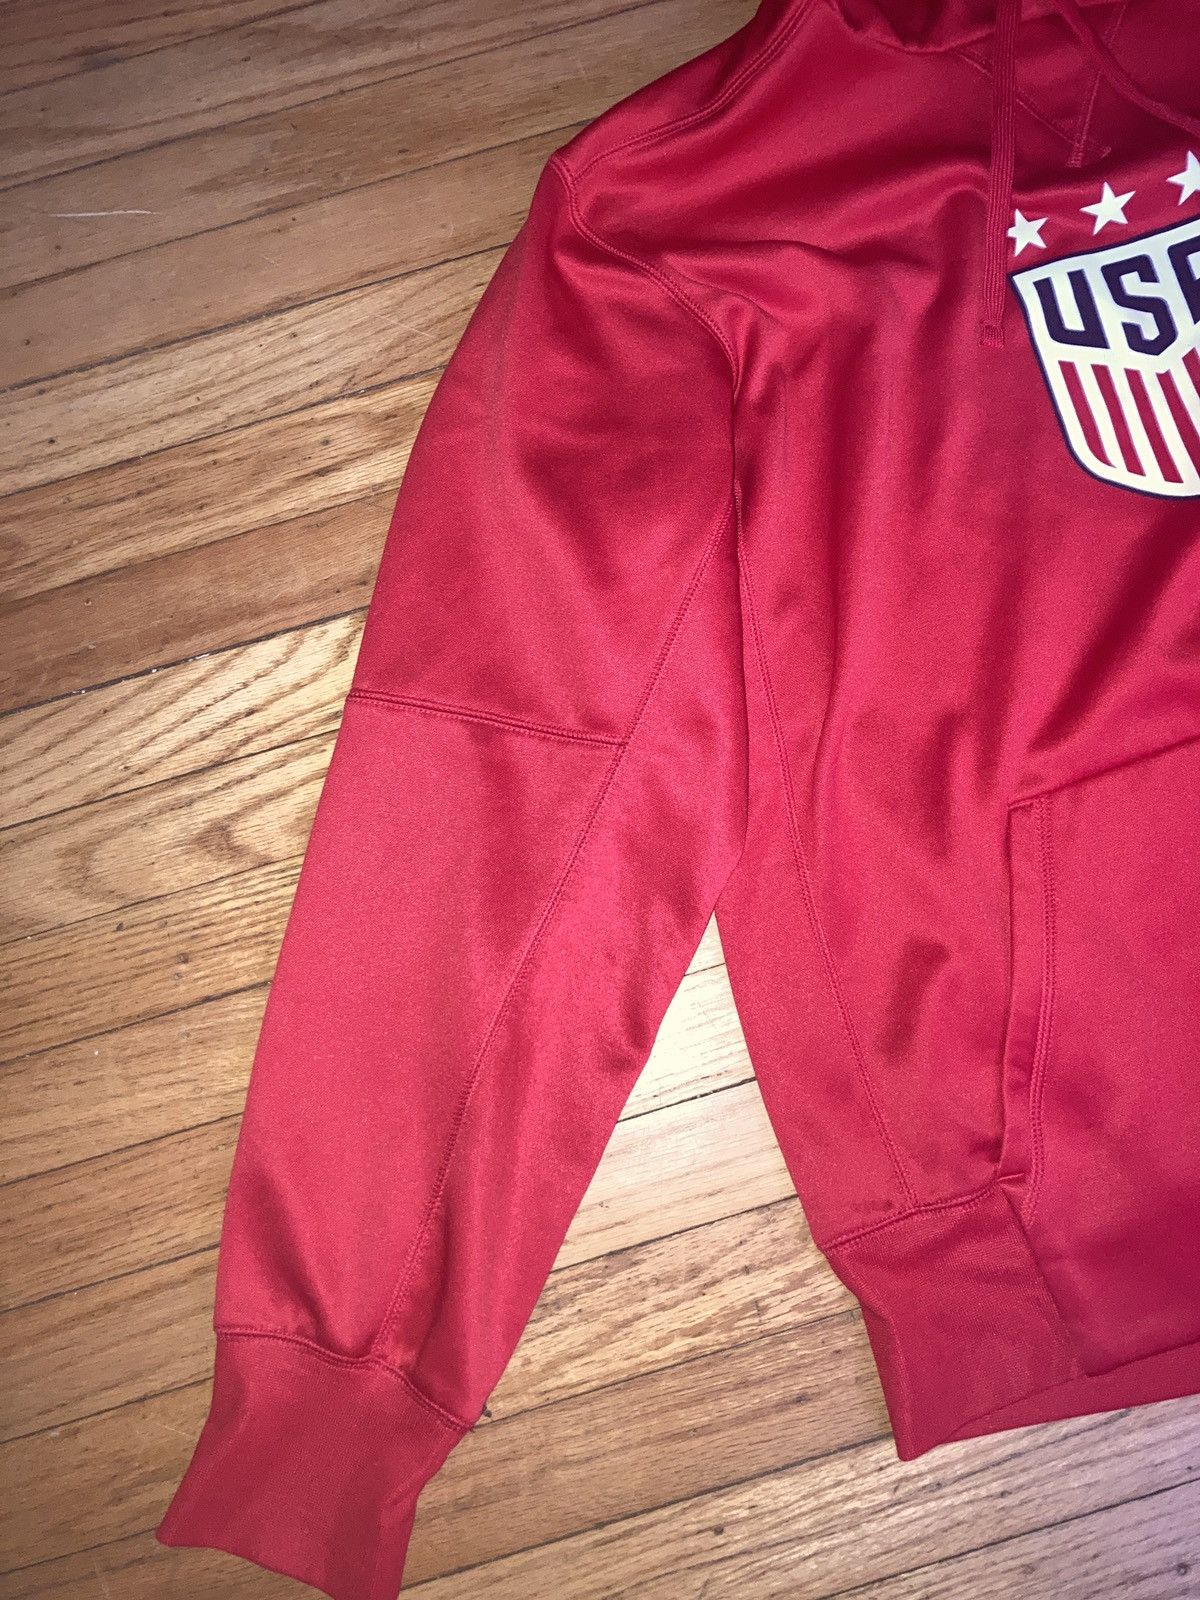 Nike Nike ( team USA ) hoodie 🌎 Size US L / EU 52-54 / 3 - 3 Thumbnail